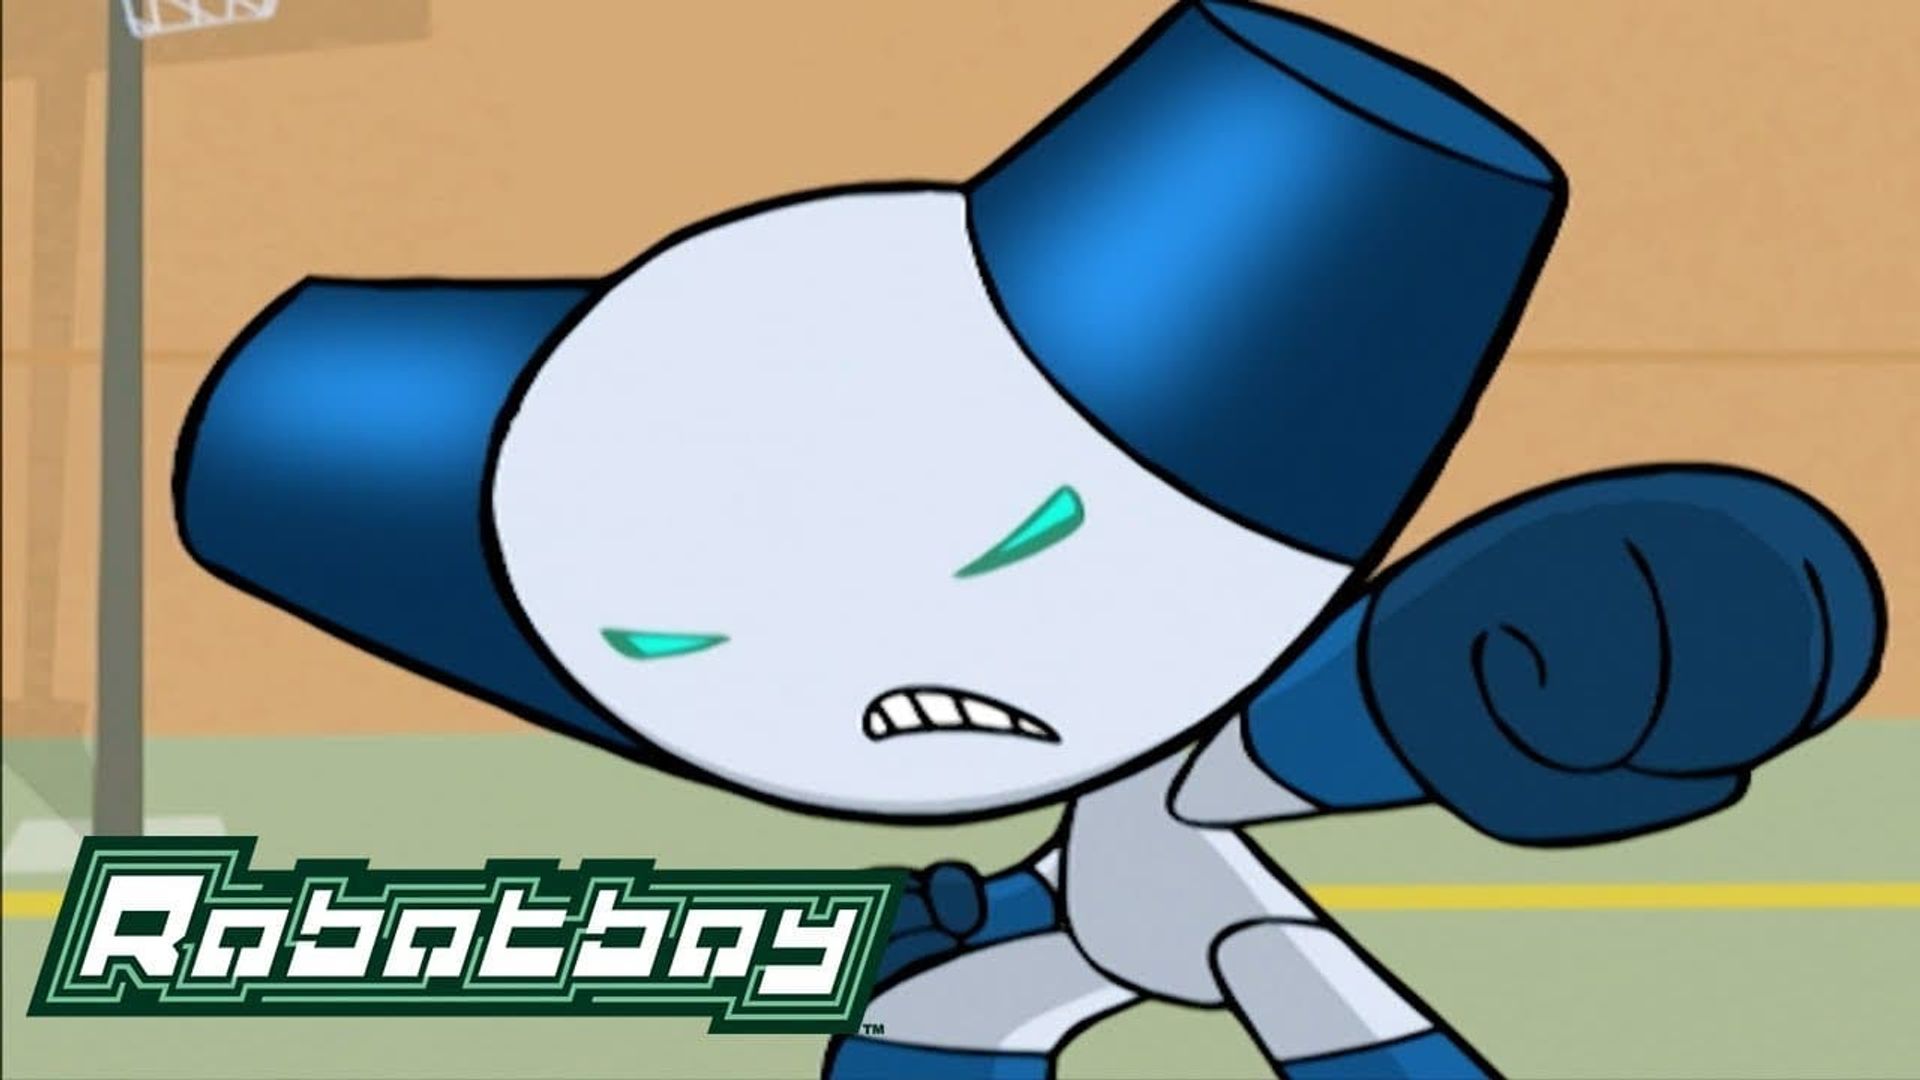 Robotboy background